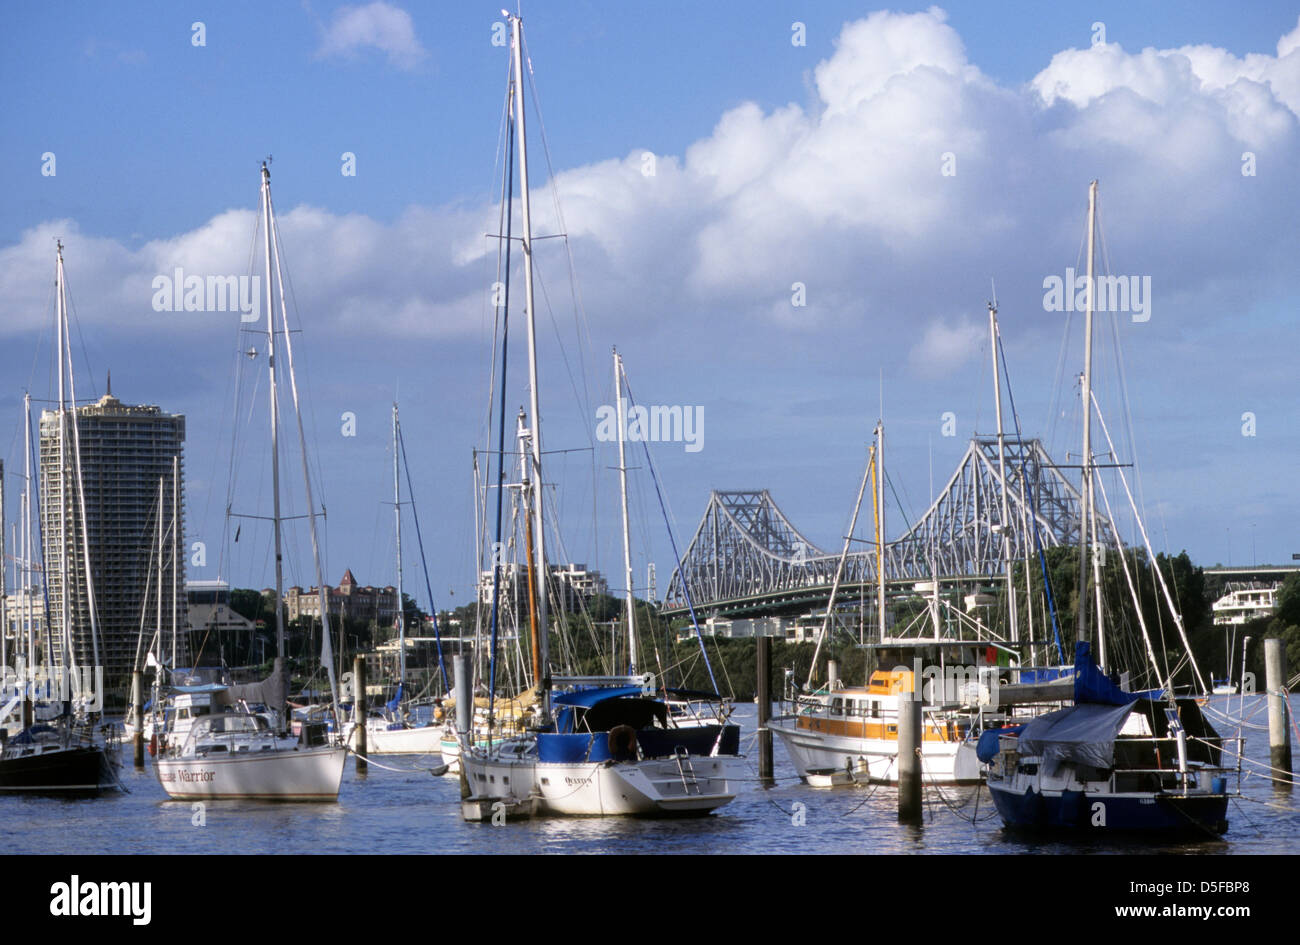 Australia, Queensland, Brisbane, the story bridge and harbour boats. Stock Photo